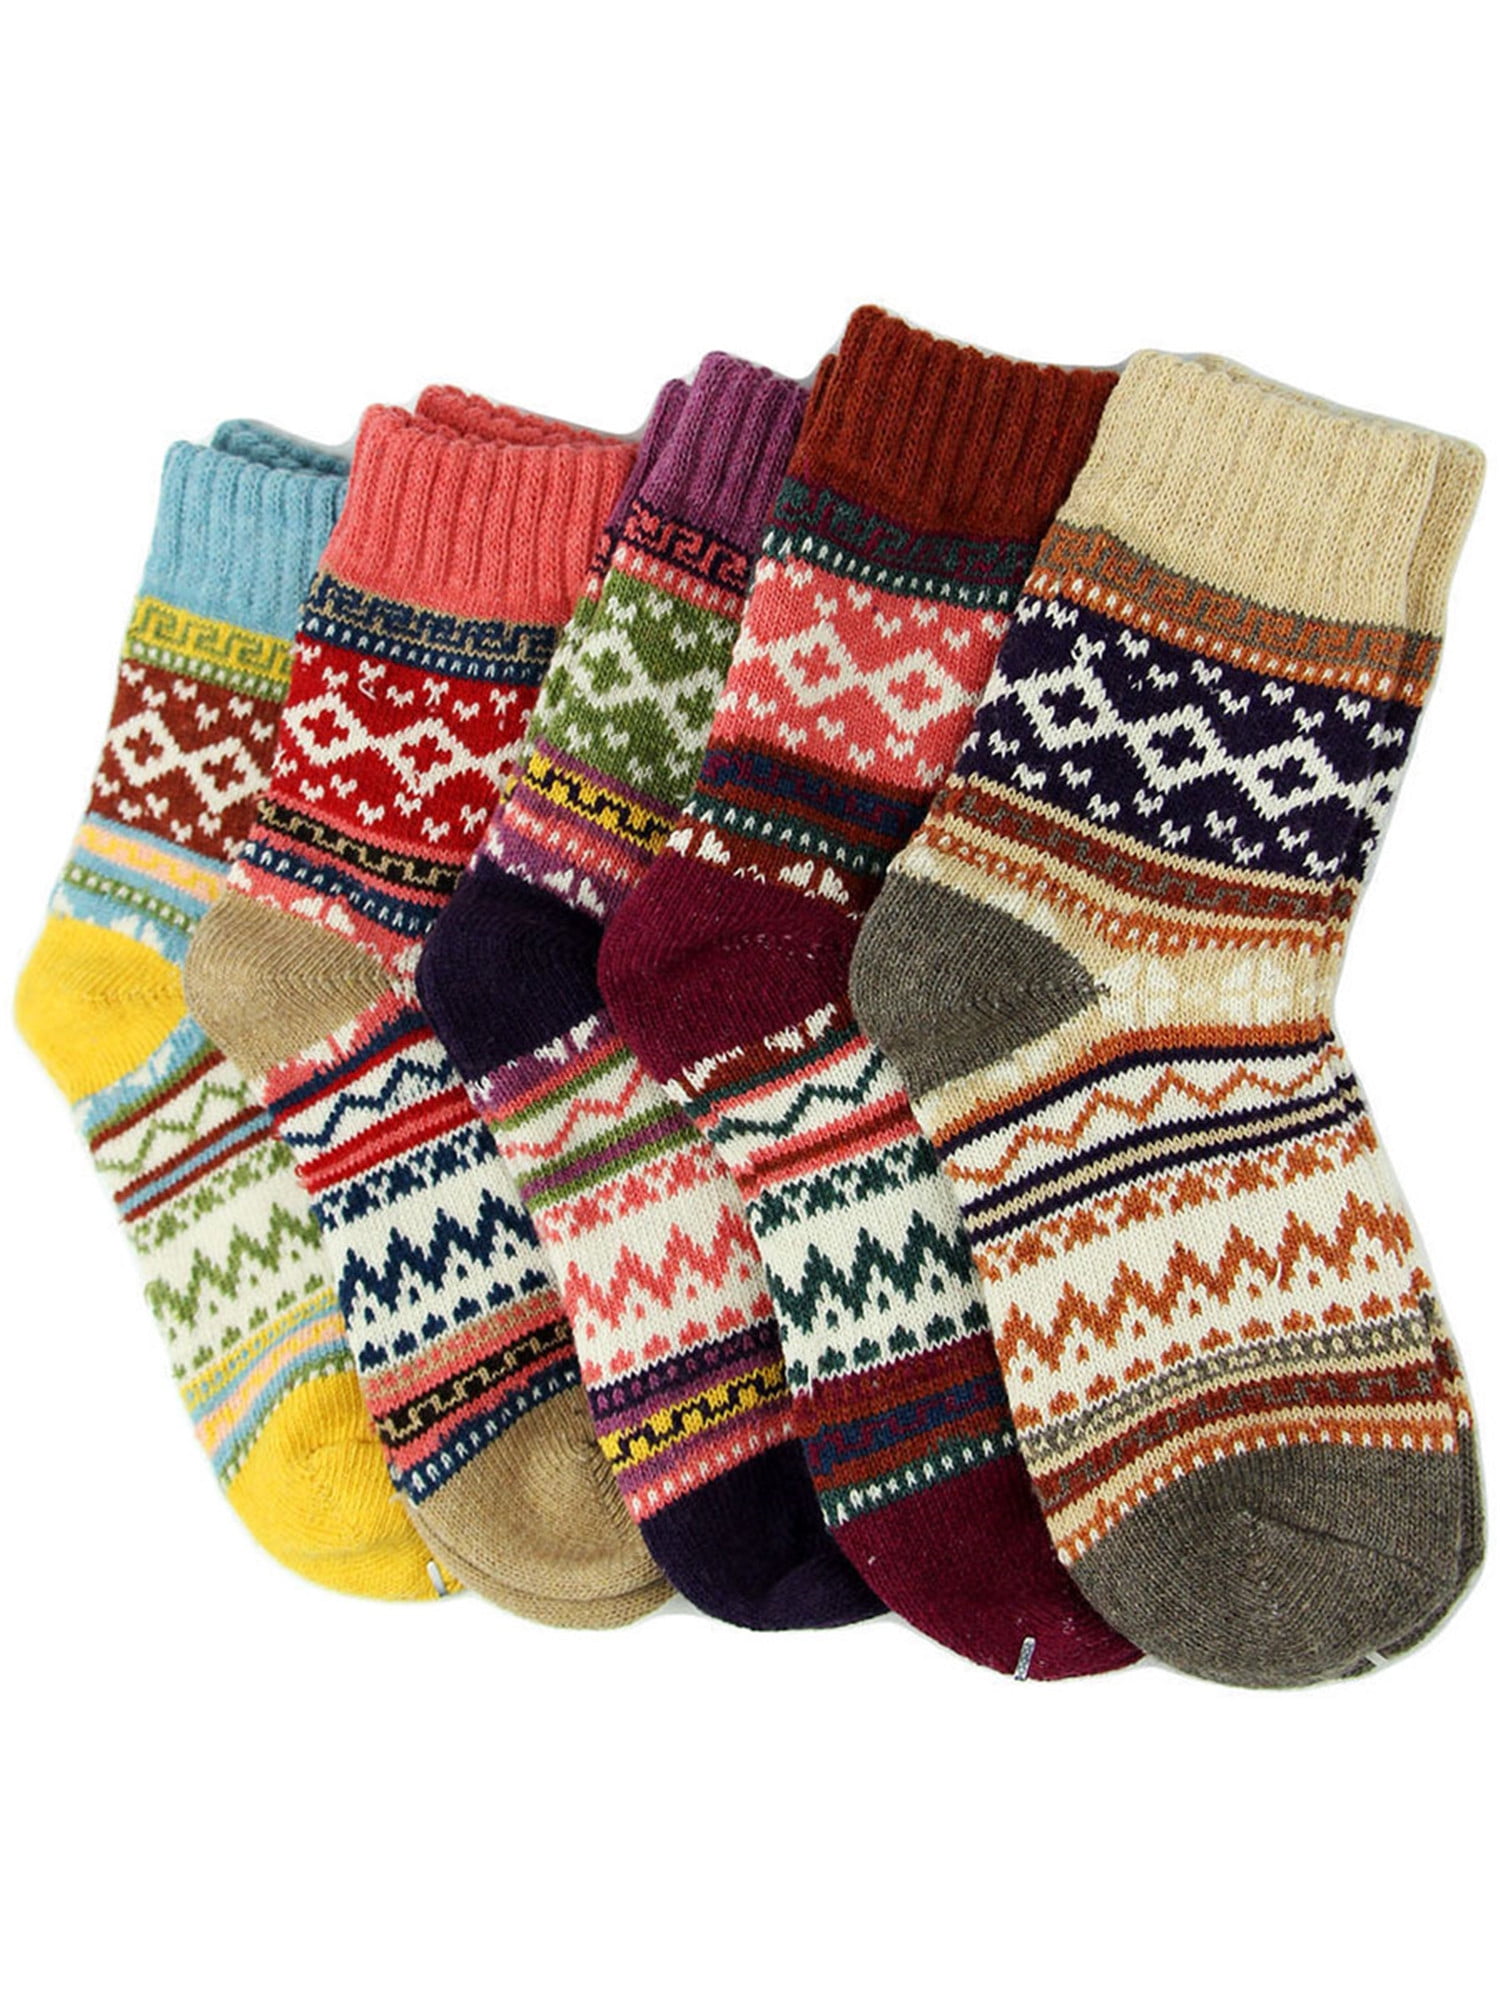 Unique Vintage Handknitted Socks